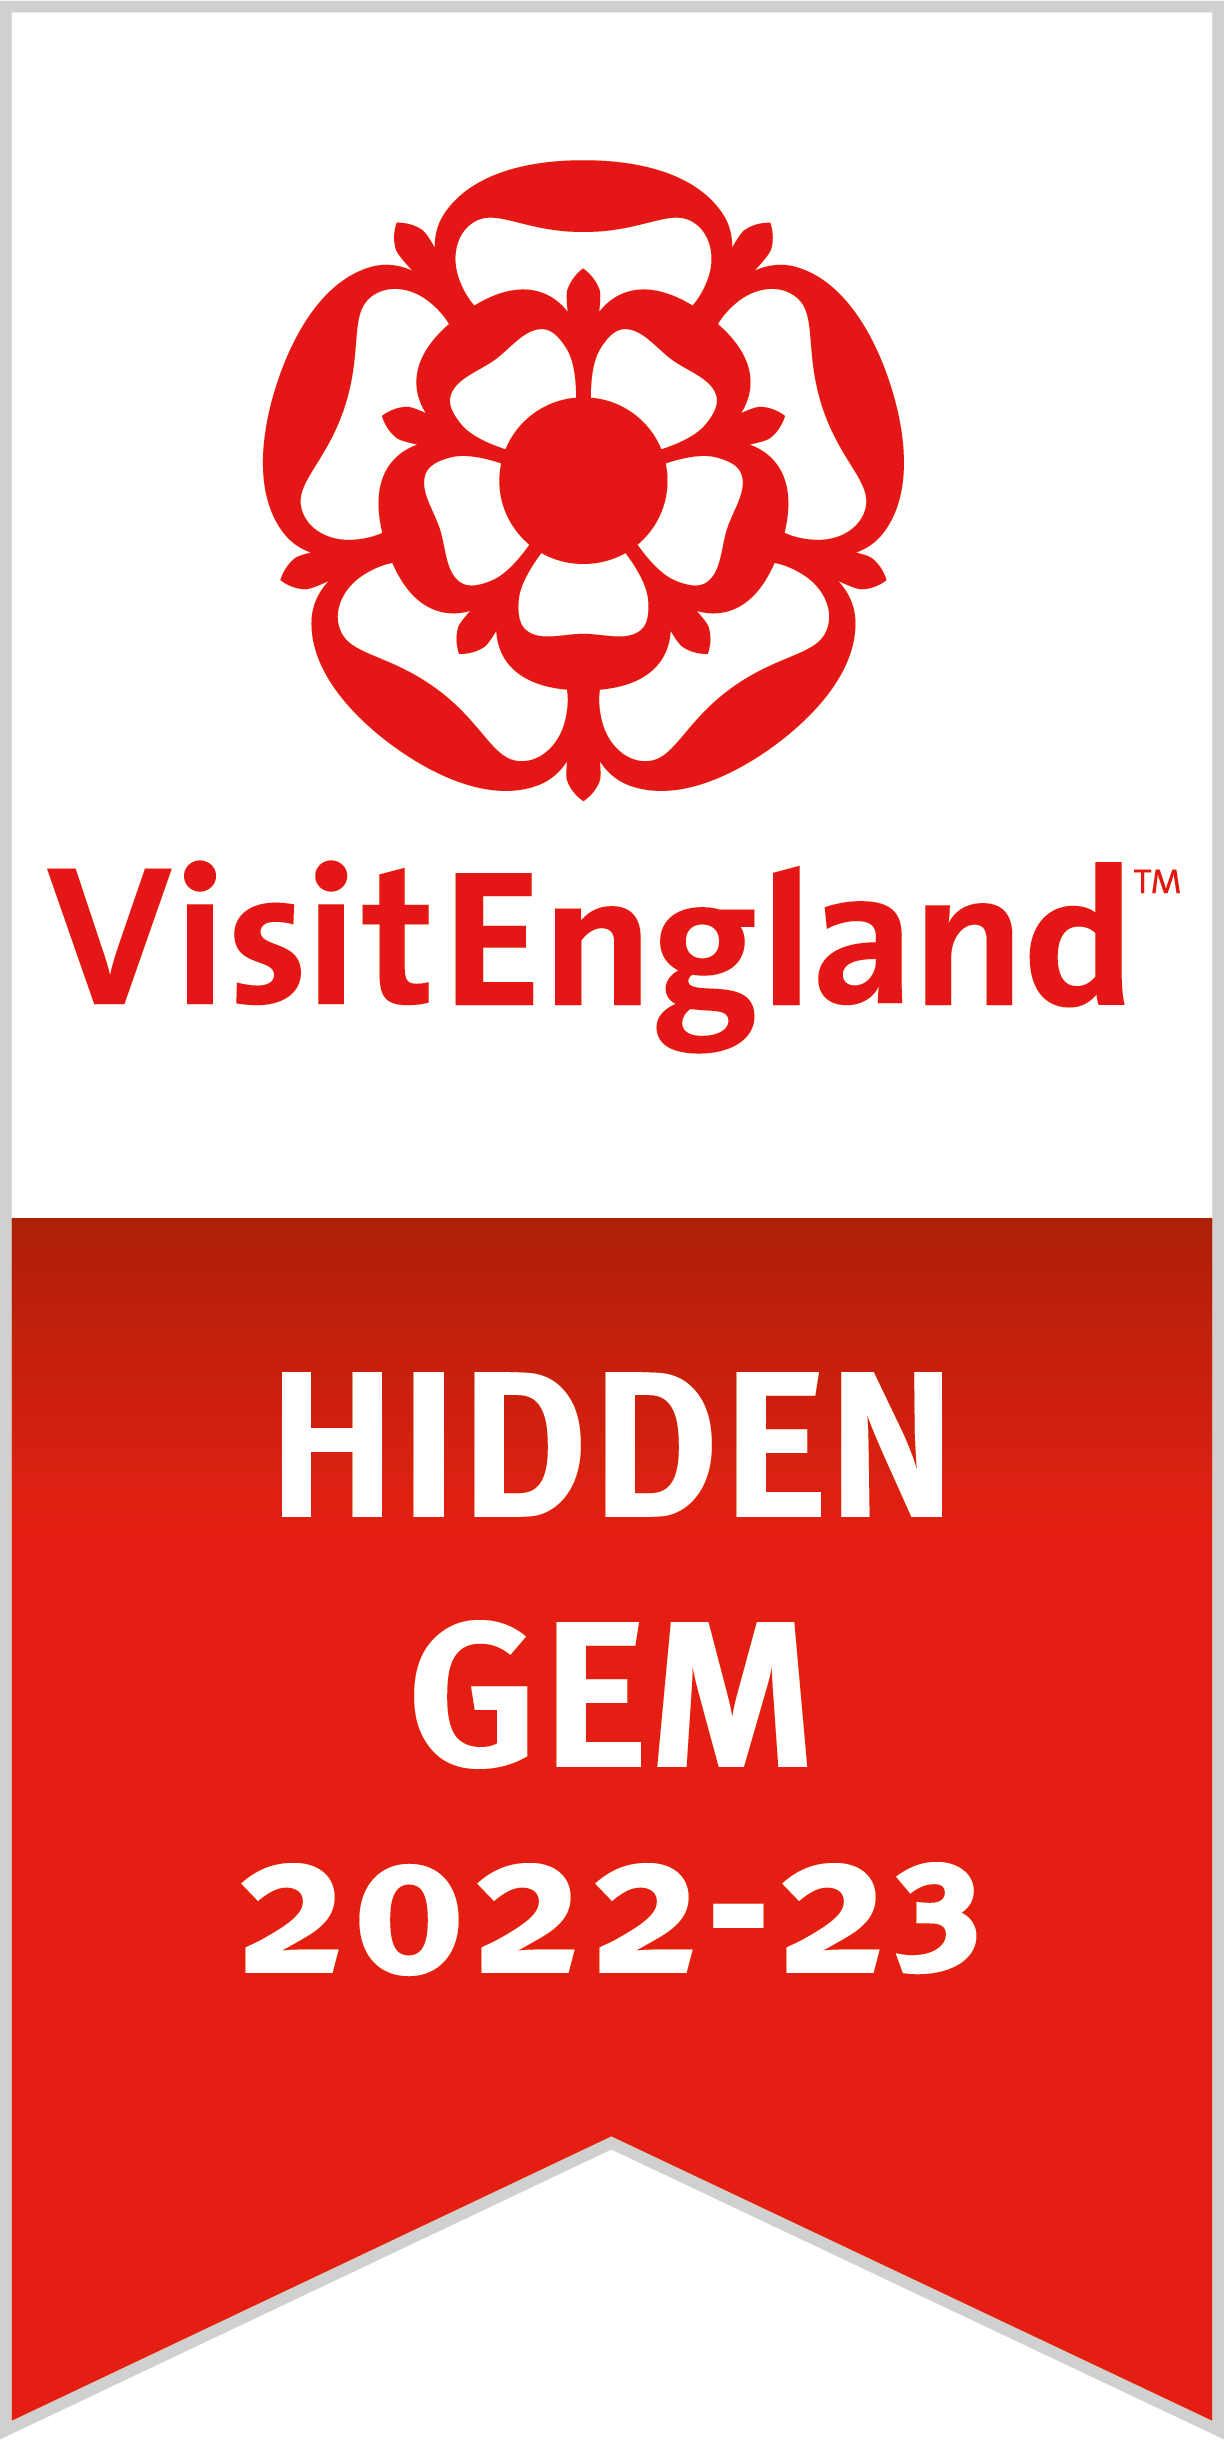 Visit England Hidden Gem award 2022 - 23